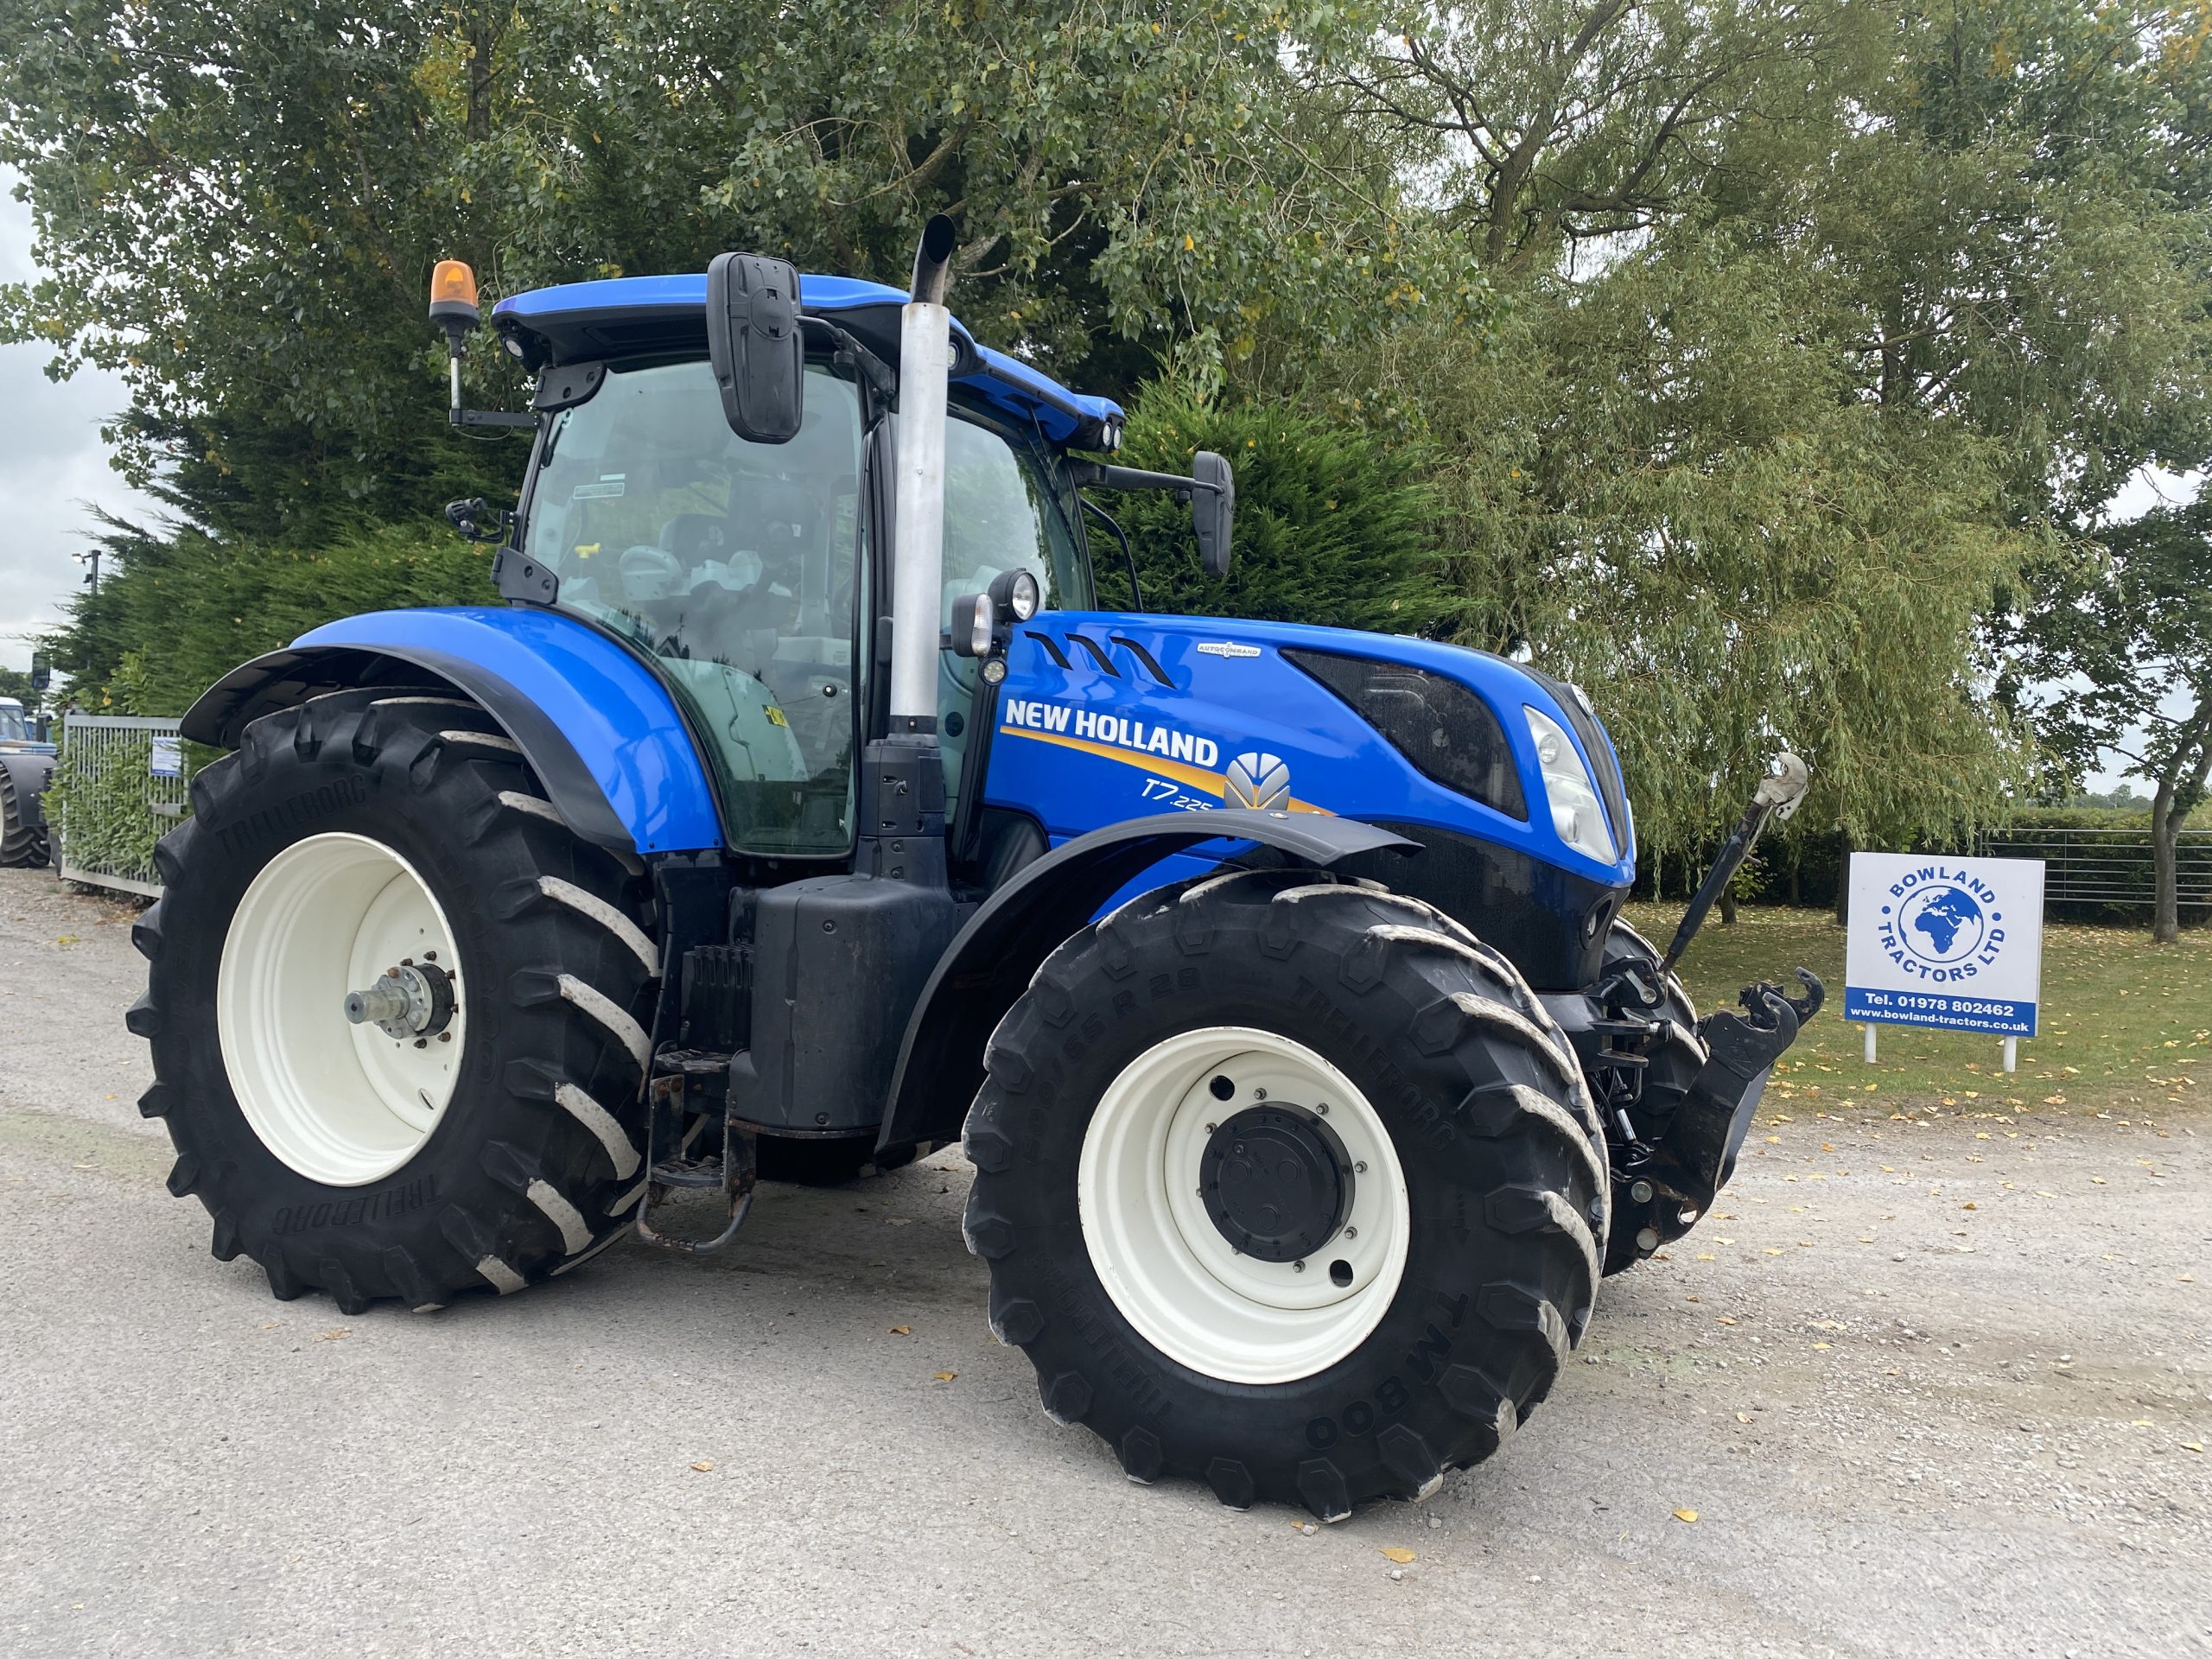 bowland-tractors.co.uk